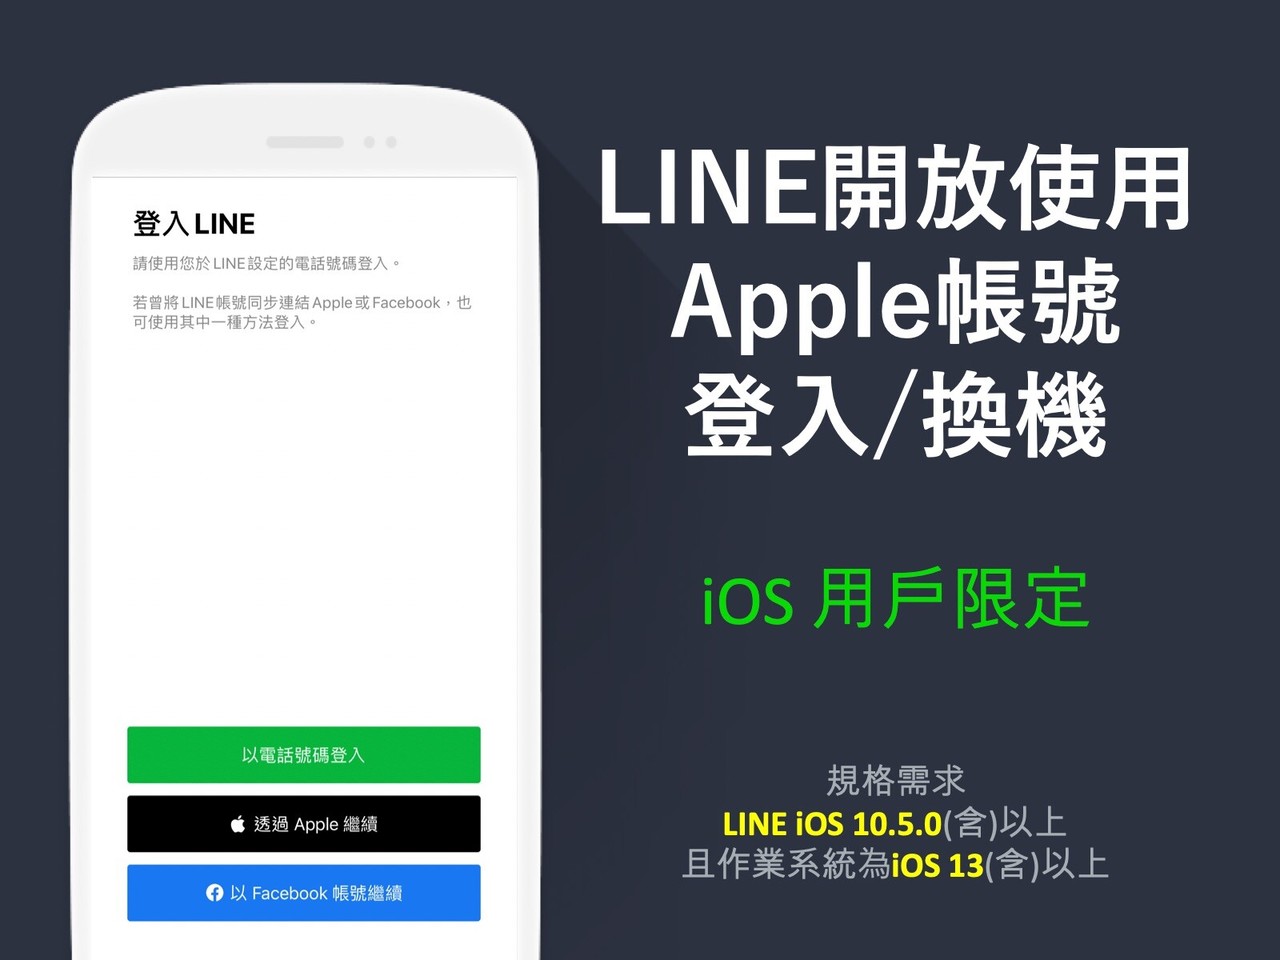 Line換機轉移有新招用apple帳號登入不再怕失敗 軟體情報 數位 聯合新聞網